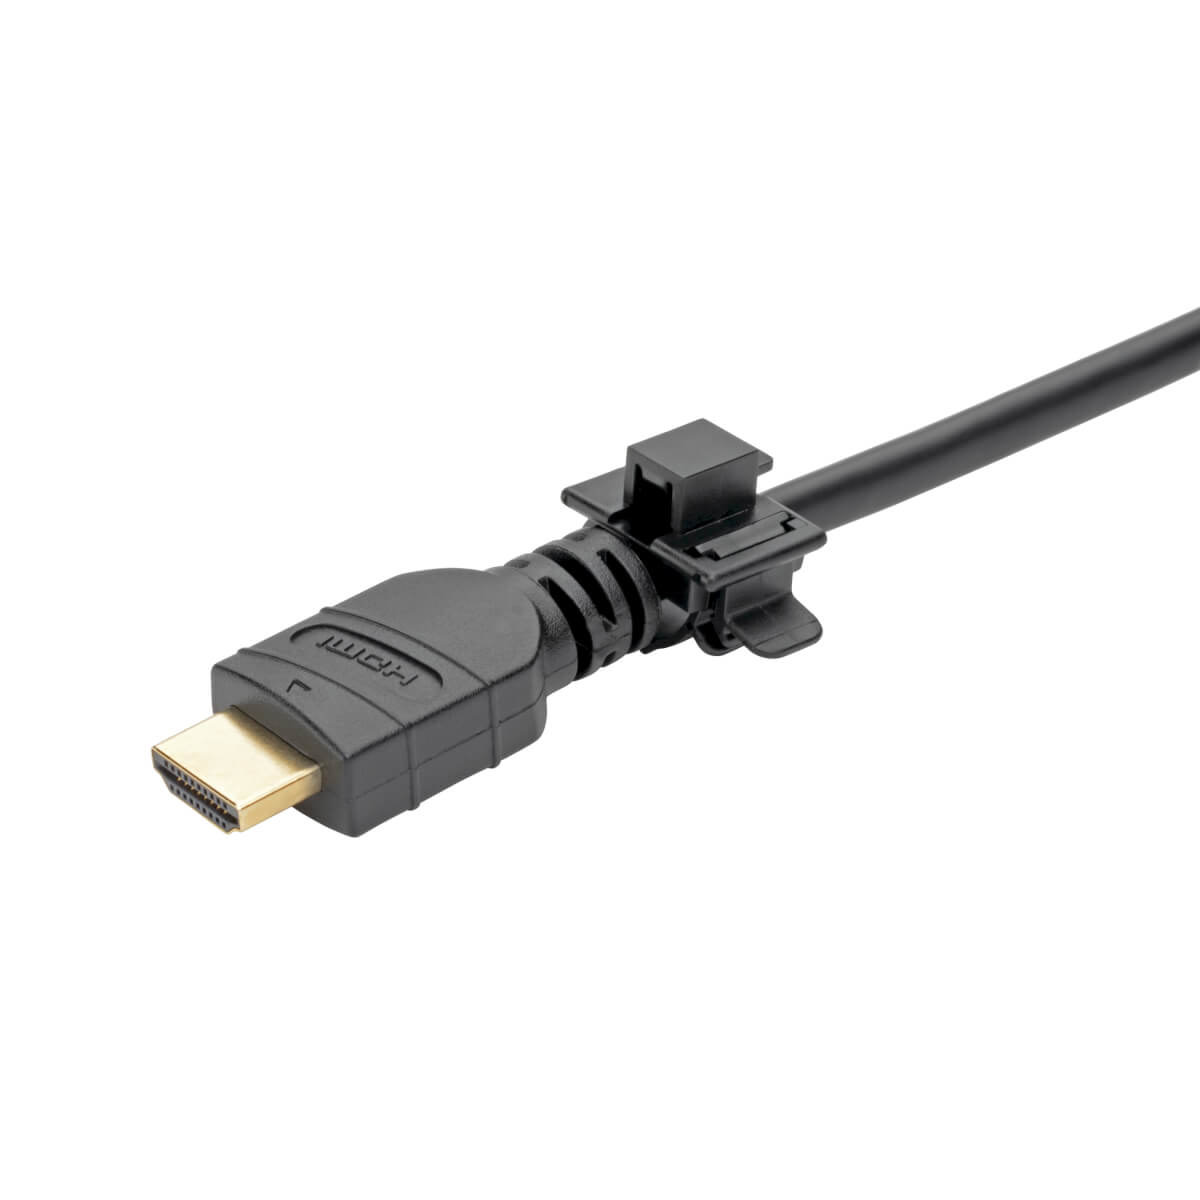 HDMI Cable Lock Clamp Tie Screw